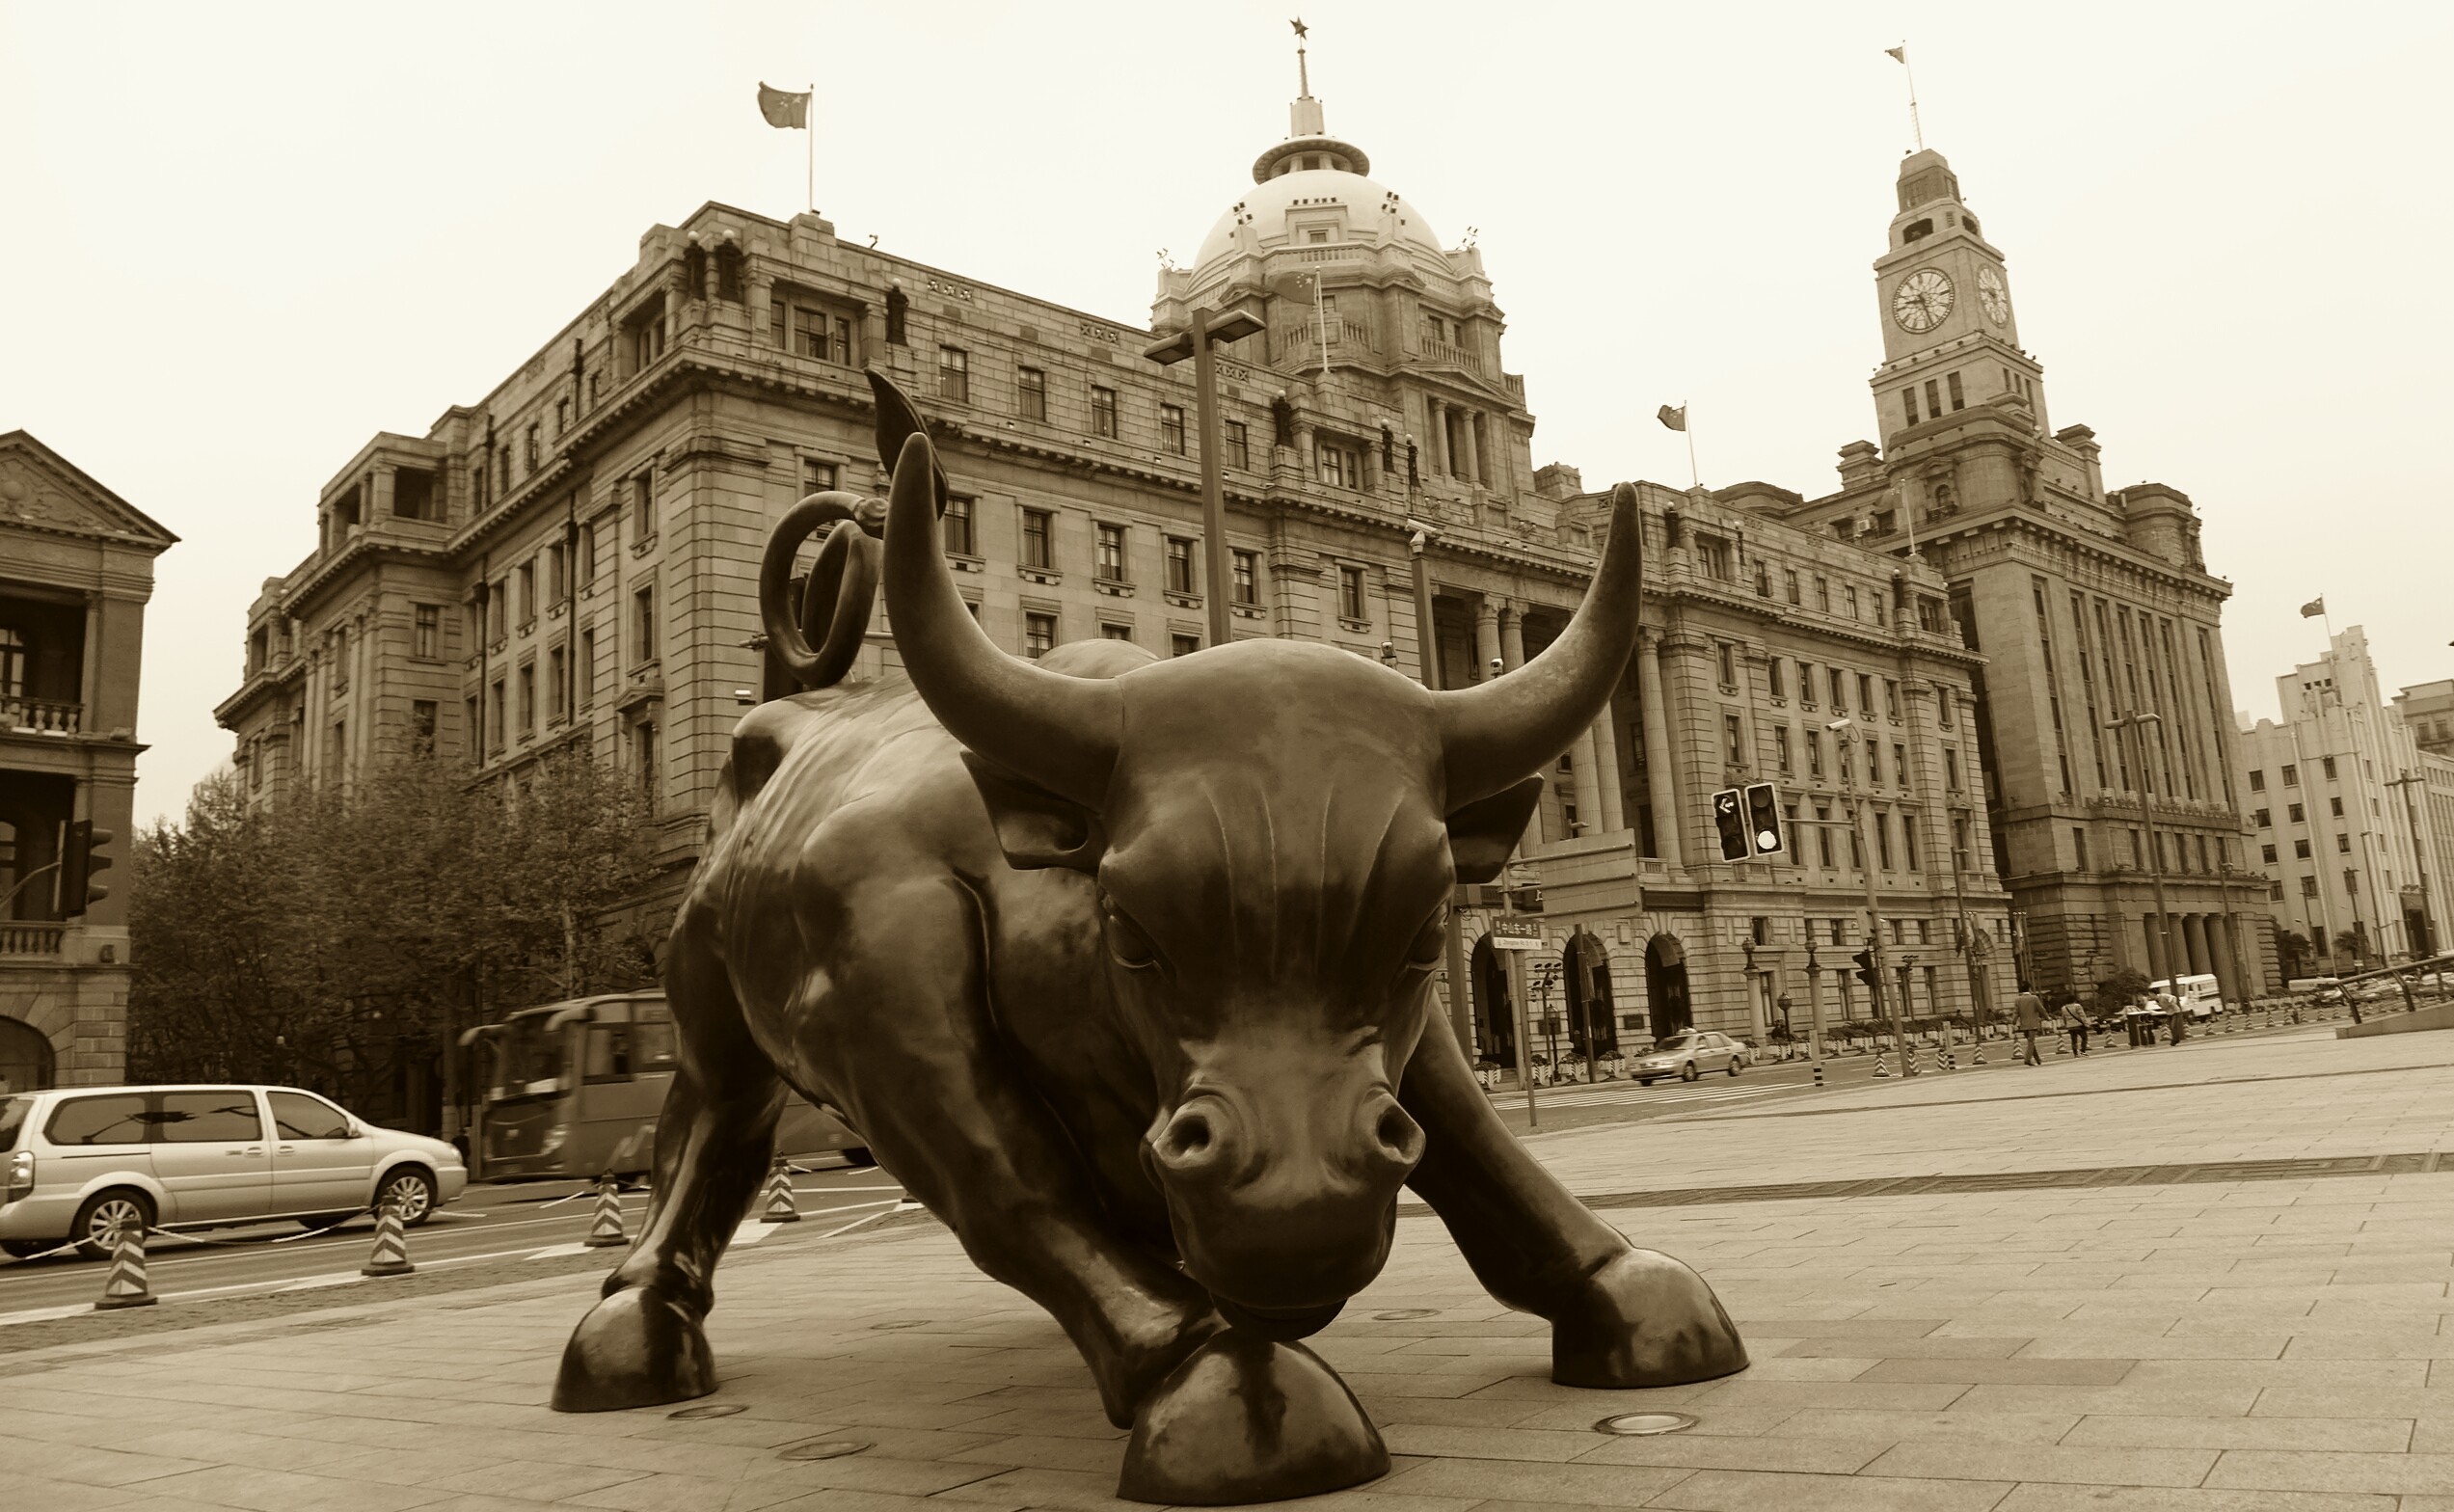 2545x1568 Replica of the Wall Street bull